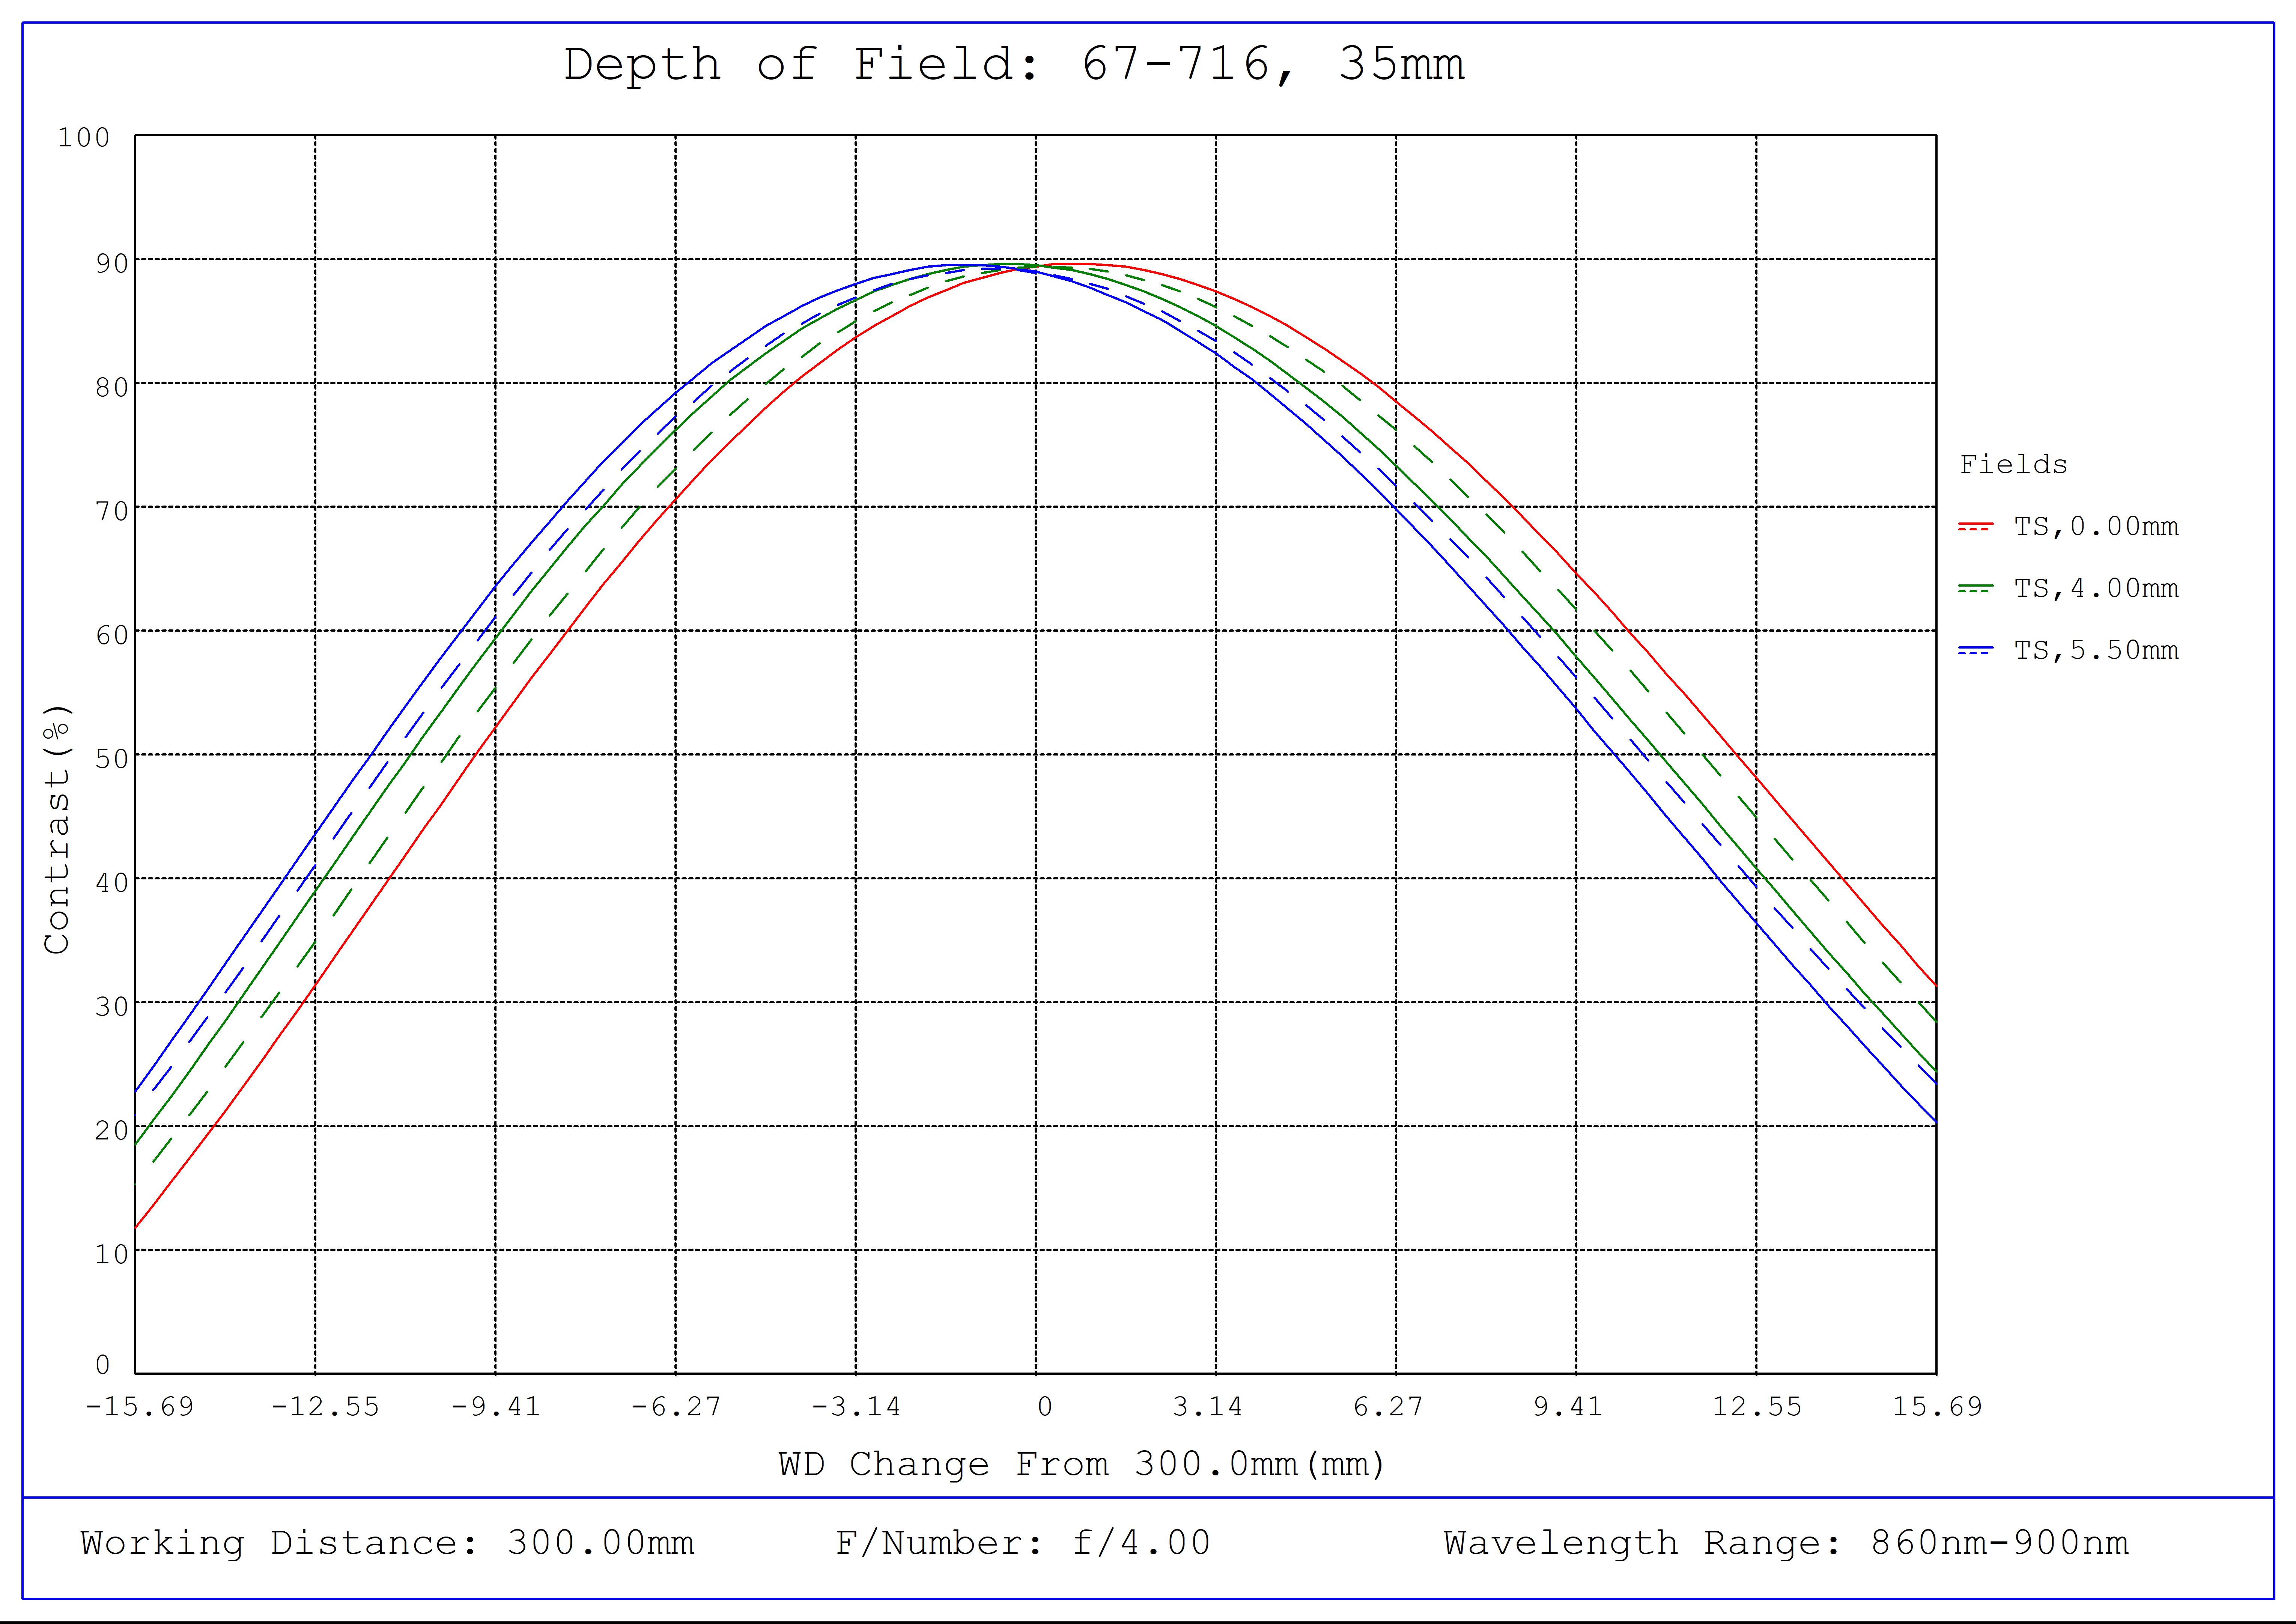 #67-716, 35mm C VIS-NIR Series Fixed Focal Length Lens, Depth of Field Plot (NIR), 300mm Working Distance, f4